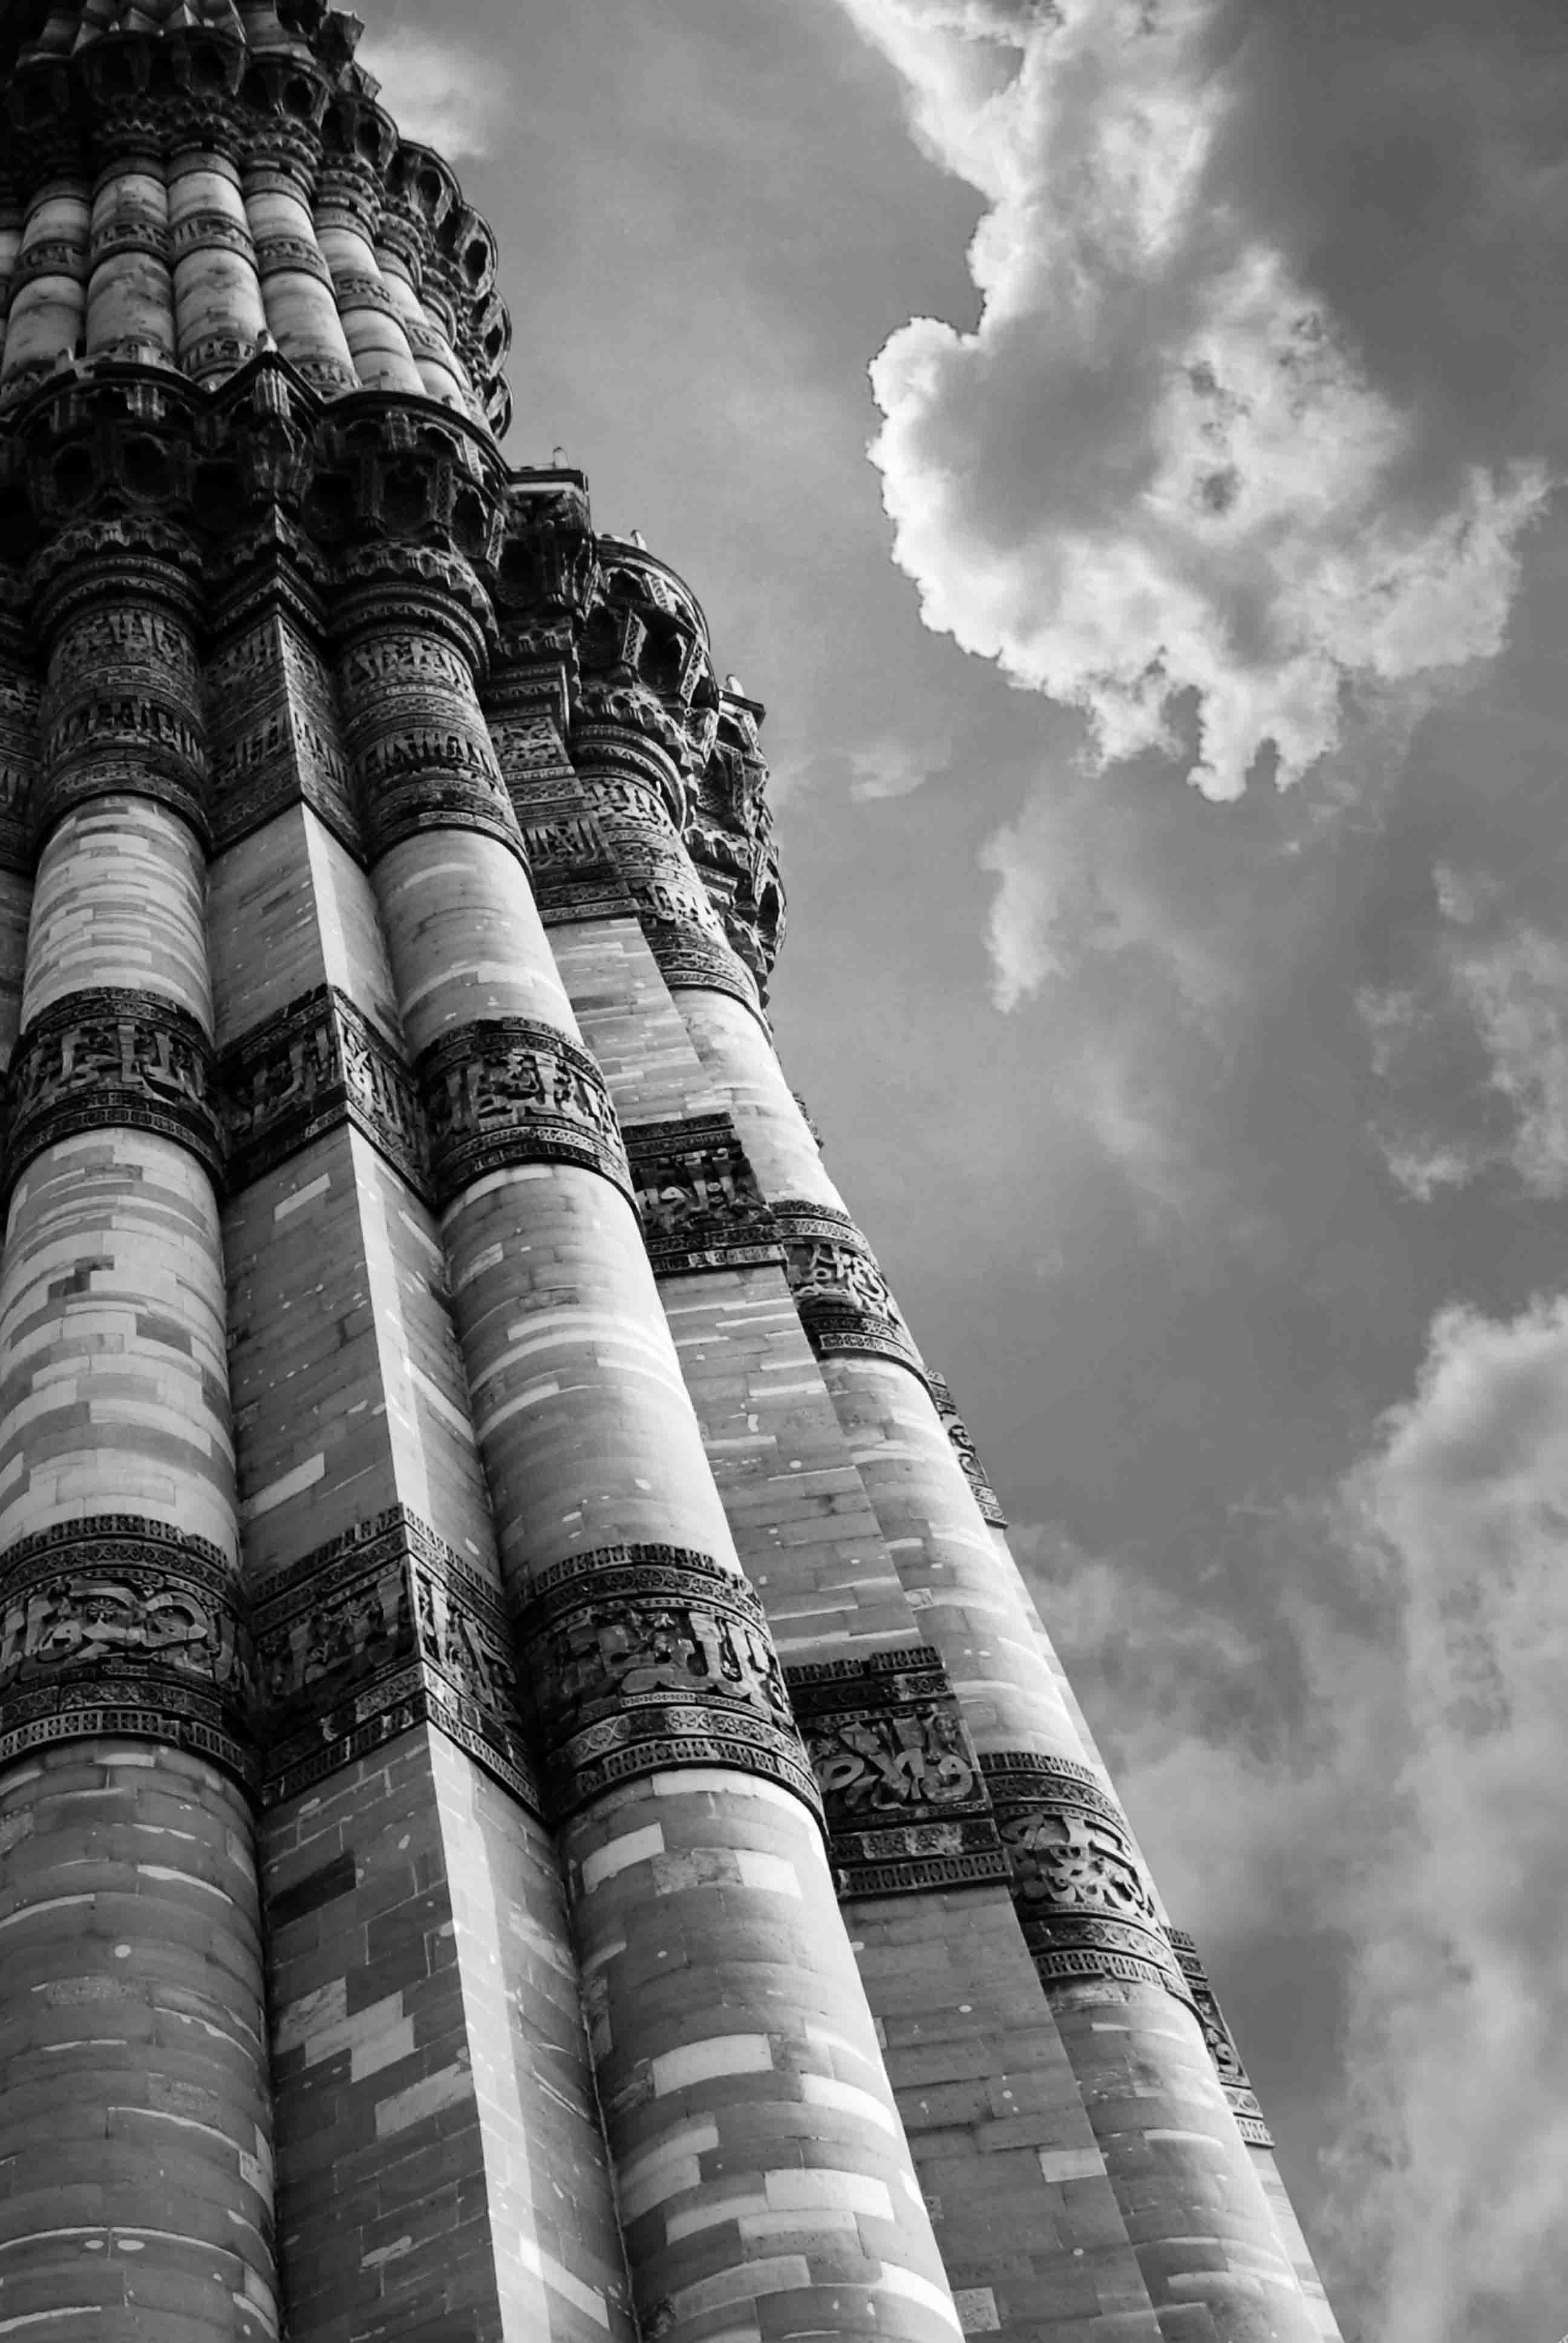 The qutub minar in india photo